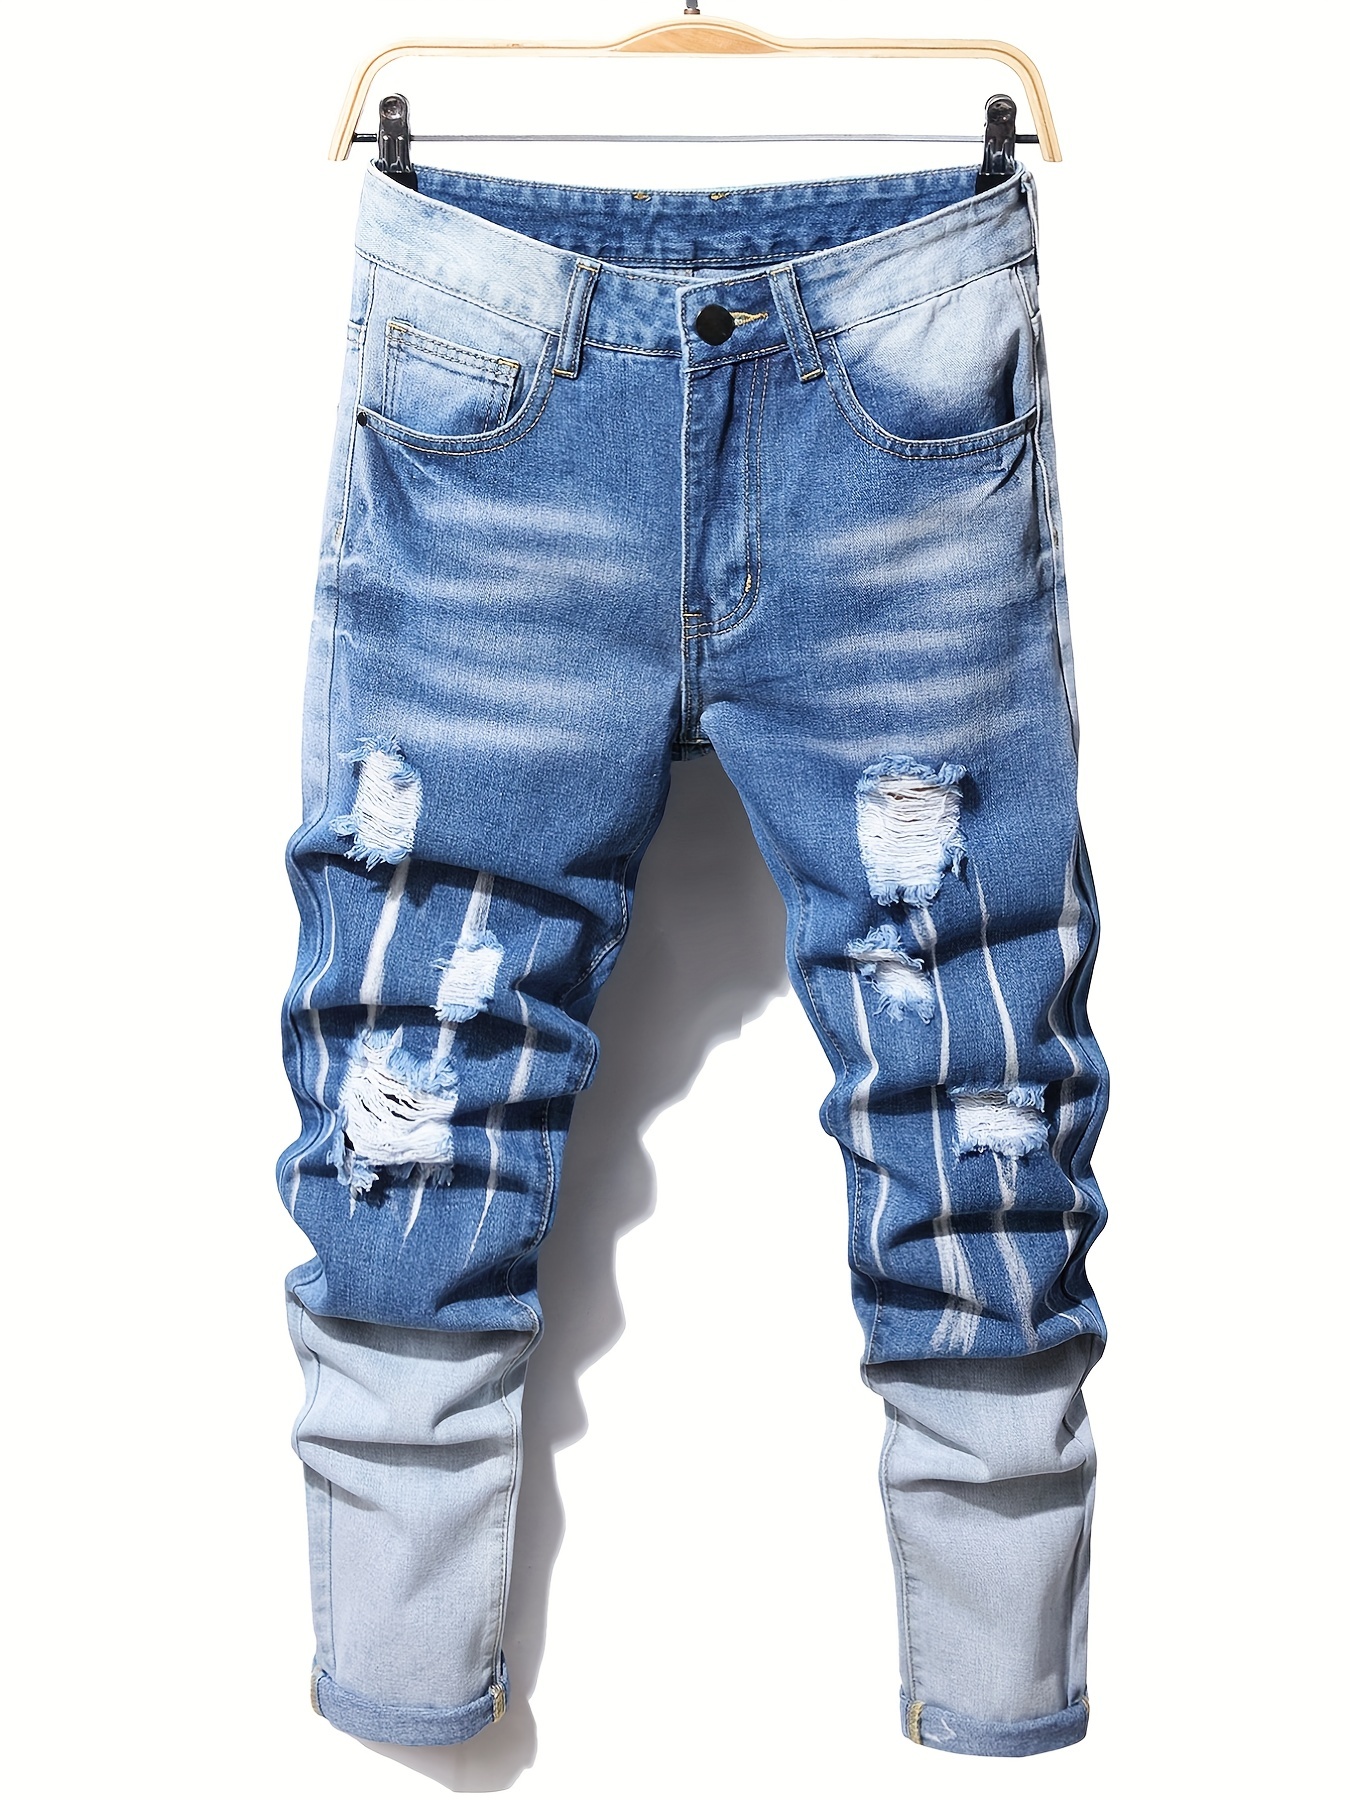 Jeans rasgados slim fit, calça jeans masculina casual estilo de